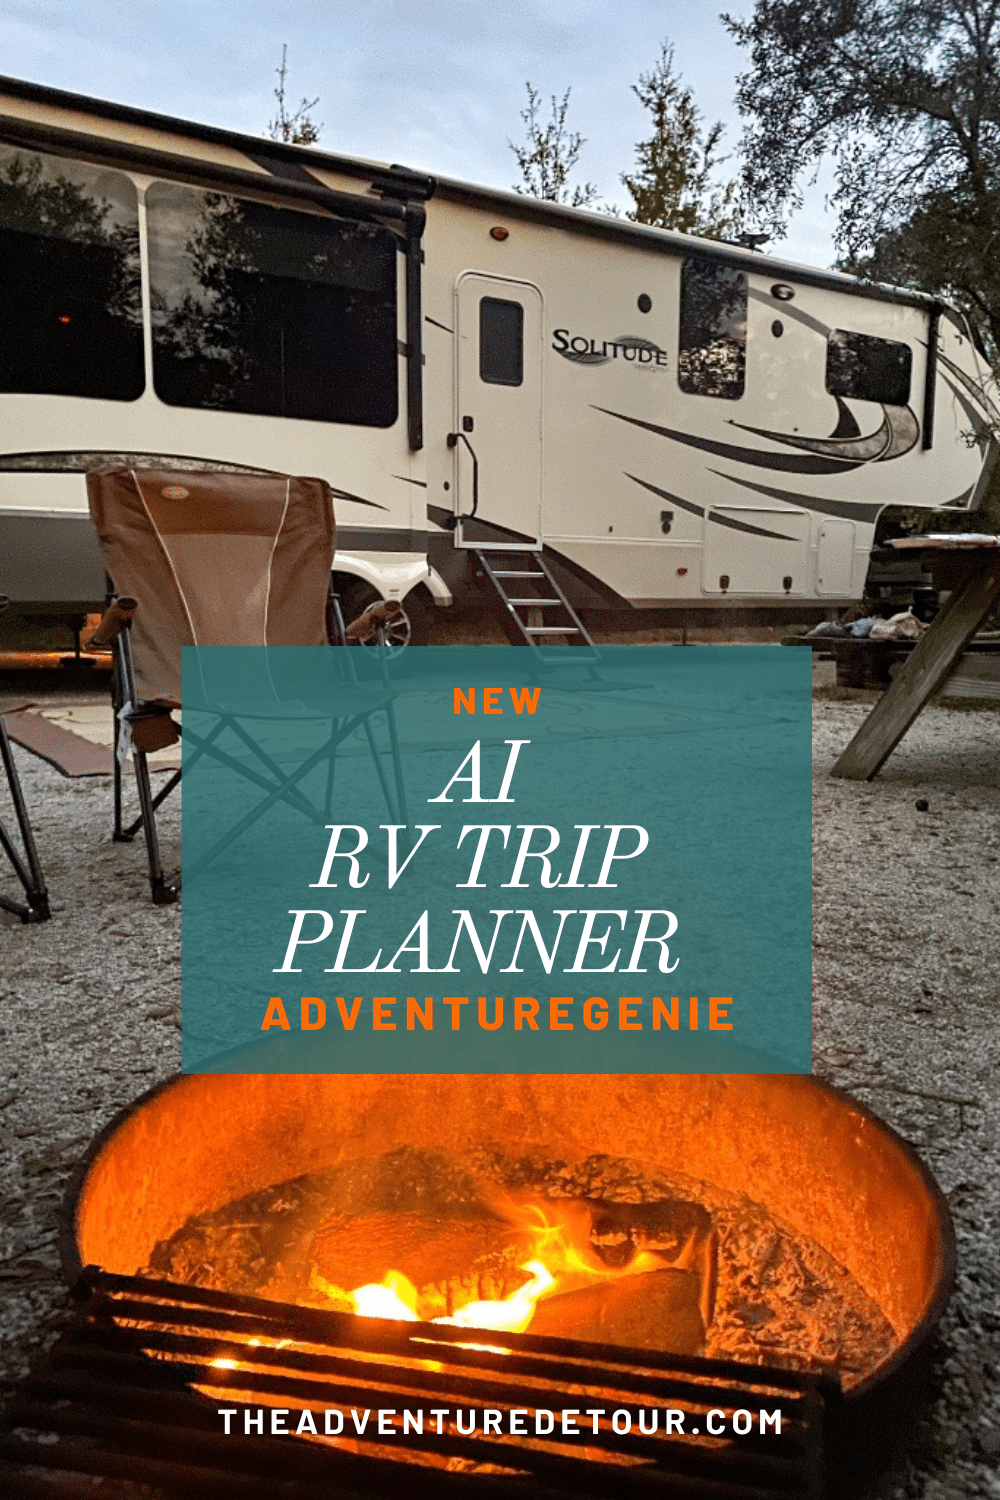 RV with campfire in campsite